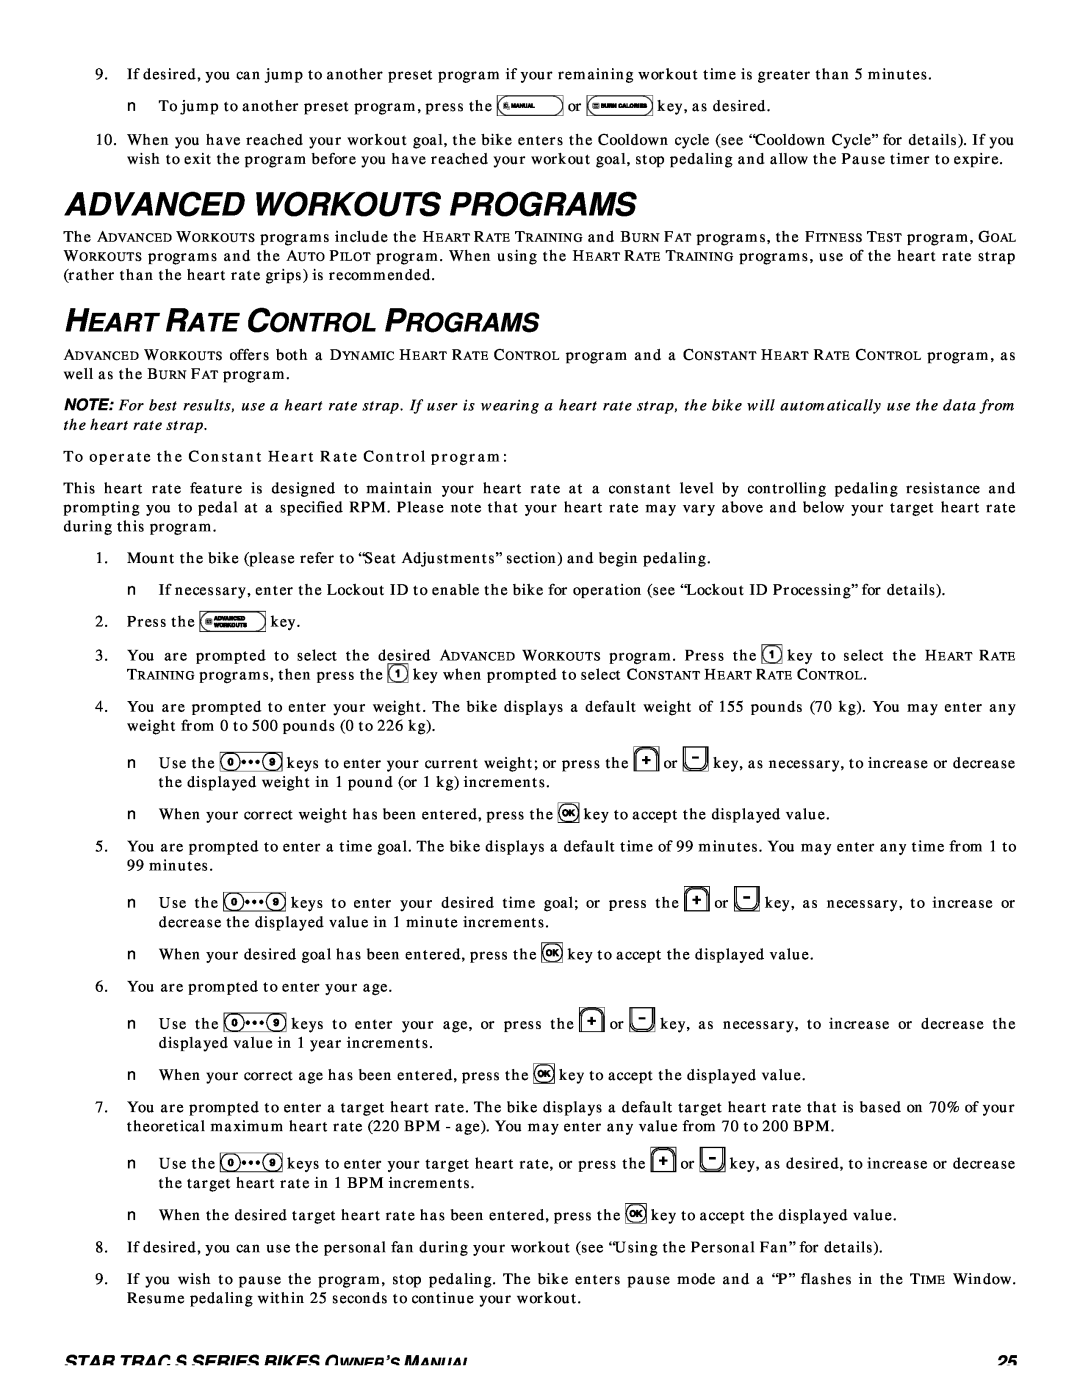 Star Trac S-RB RECUMBENT BIKE, S-UBX UPRIGHT BIKE manual Advanced Workouts Programs, Heart Rate Control Programs 